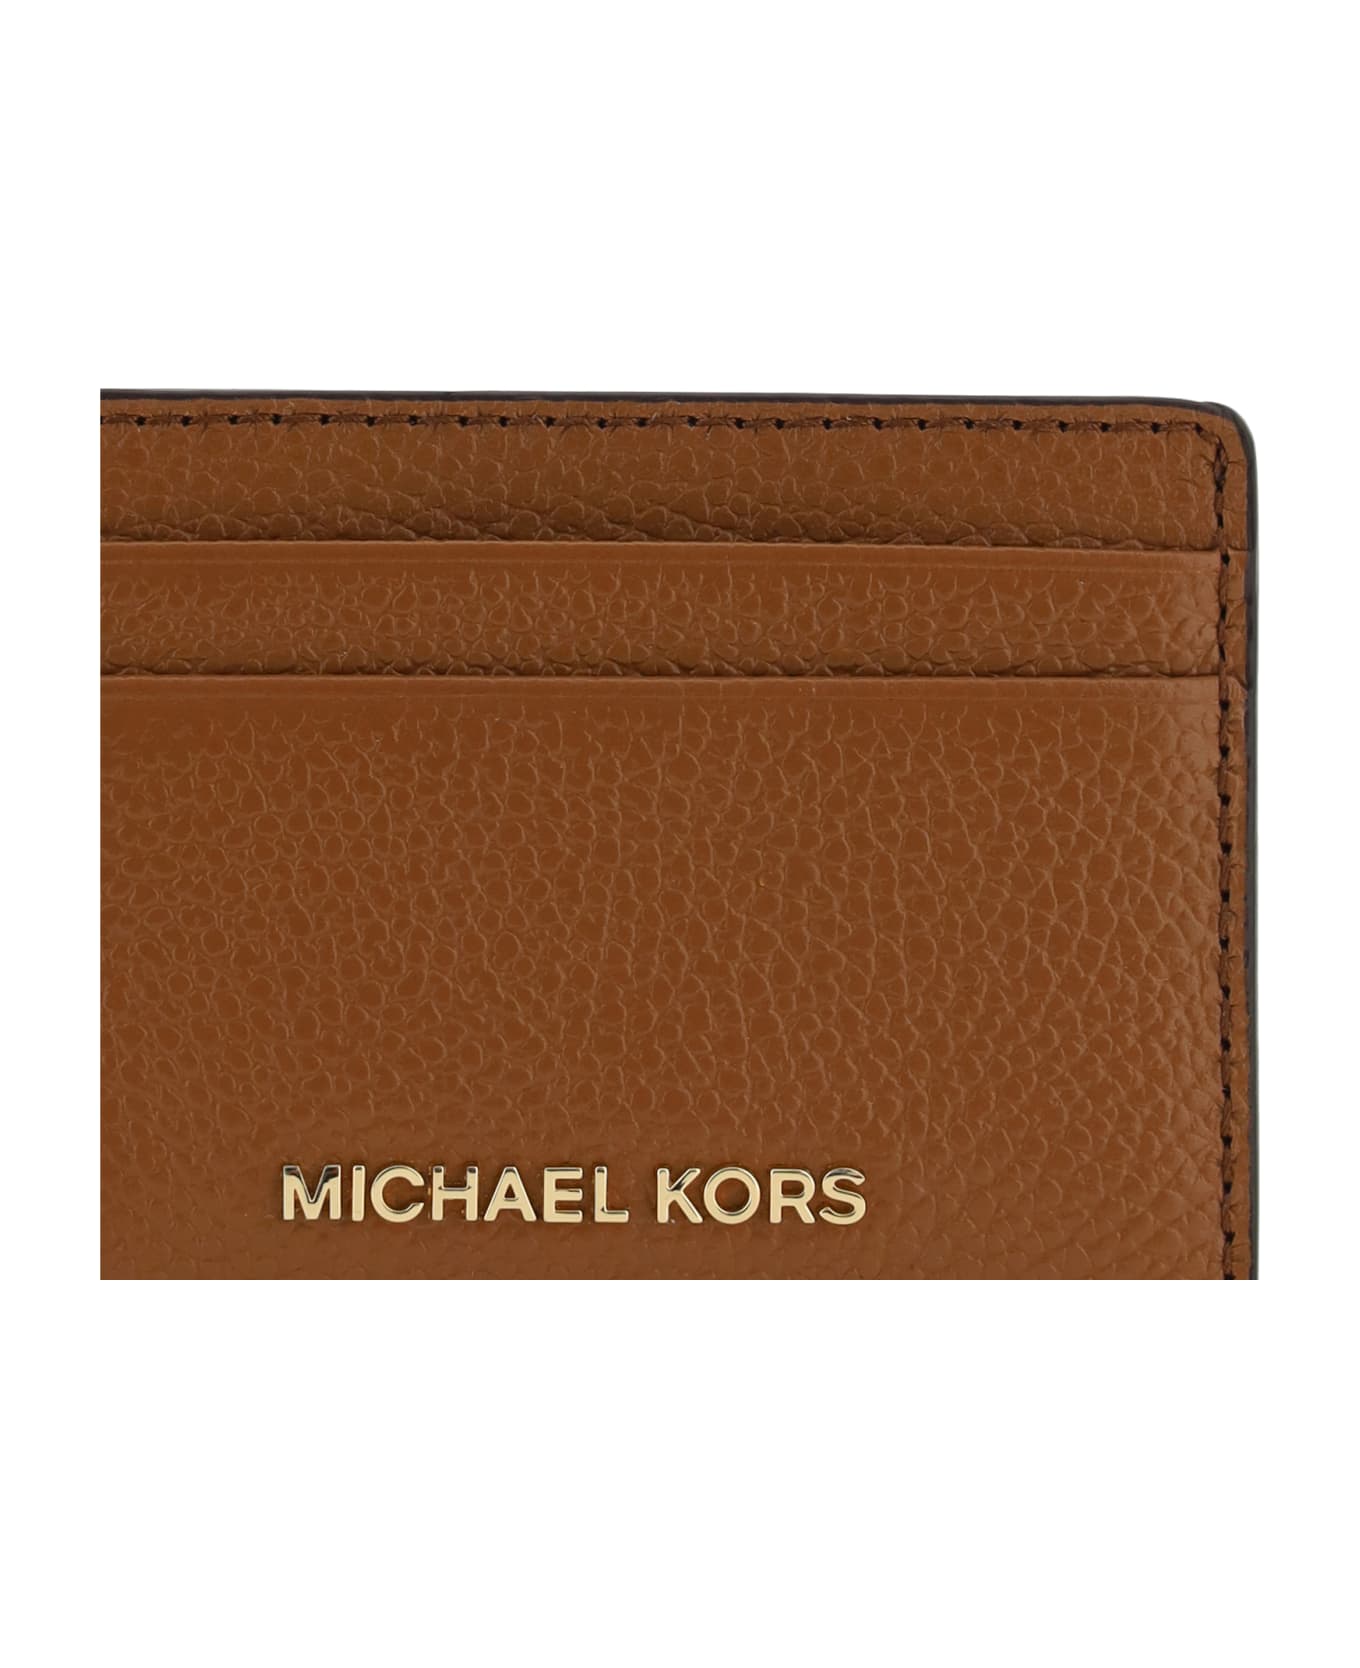 Michael Kors Card Holder - Luggage 財布